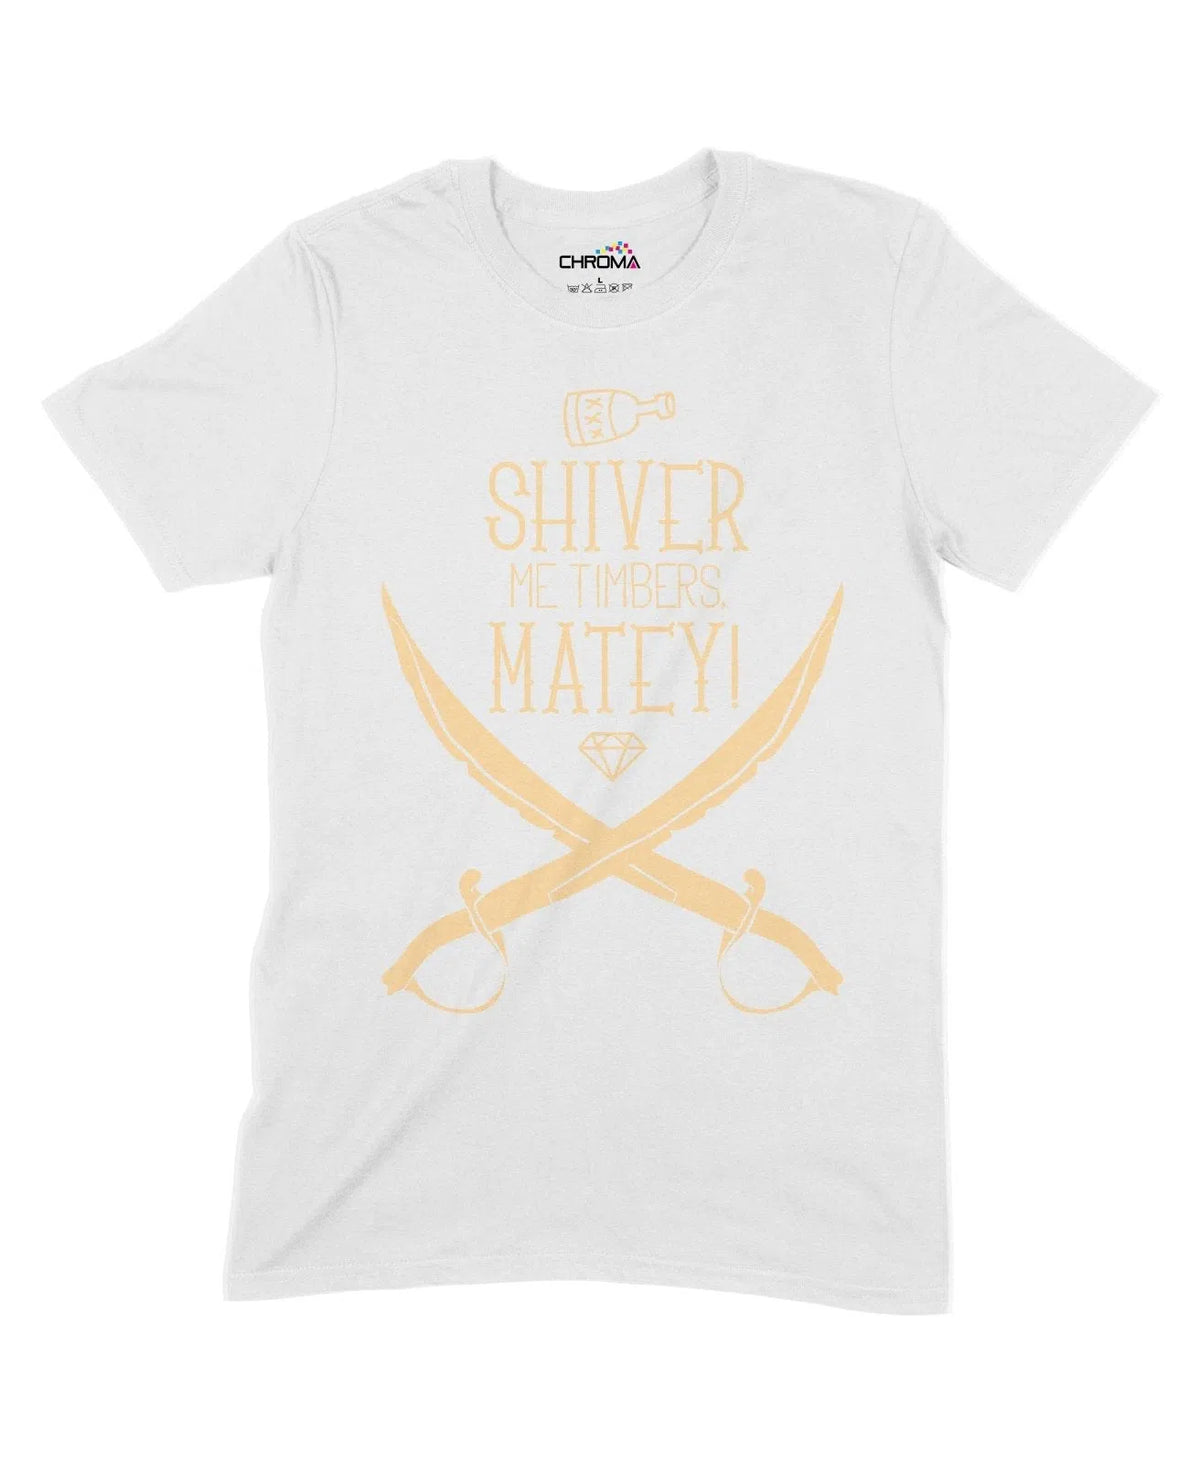 Shiver Me Timbers Matey Unisex Adult T-Shirt Chroma Clothing